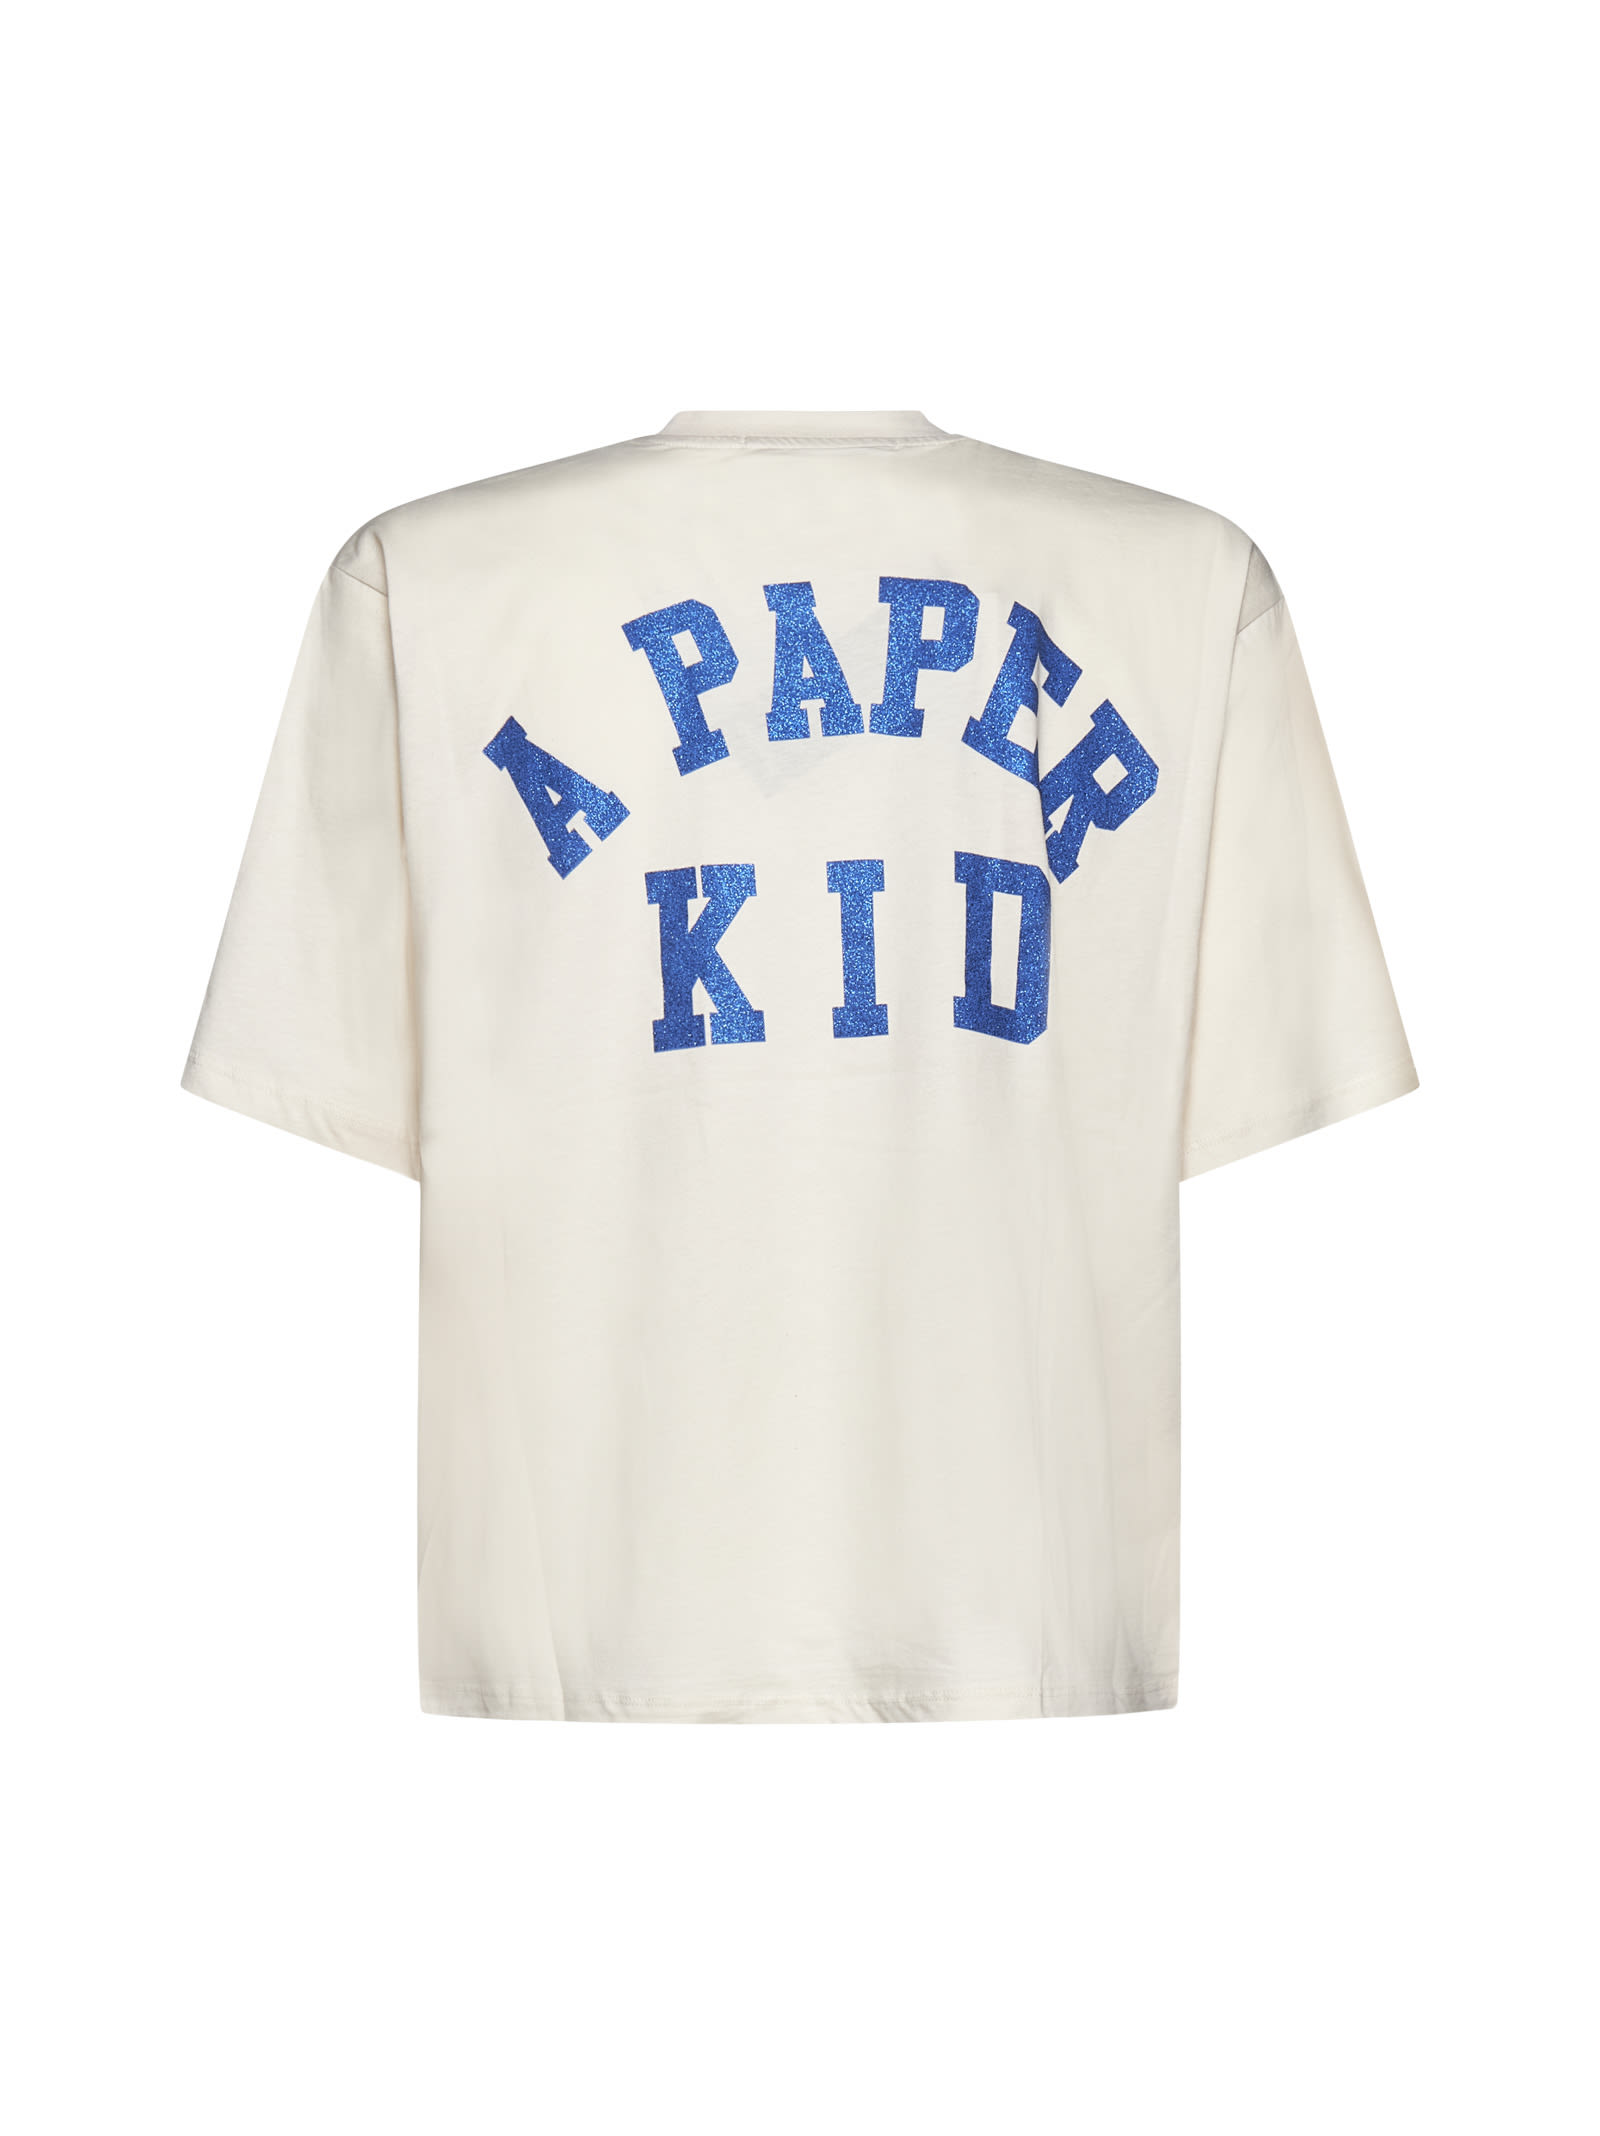 Shop A Paper Kid T-shirt In Cream